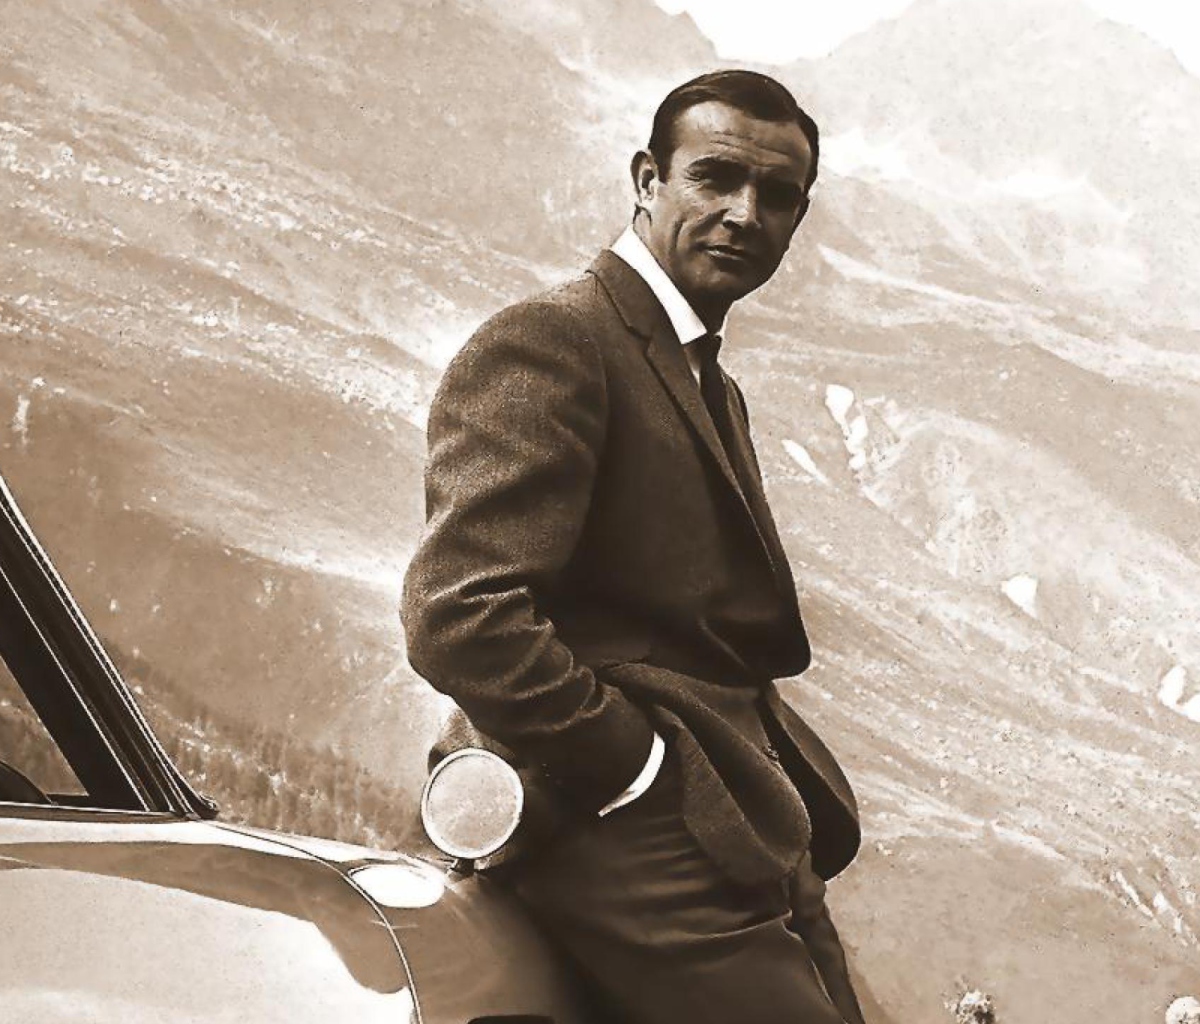 James Bond Agent 007 Goldfinger Wallpaper For Android 10x1024